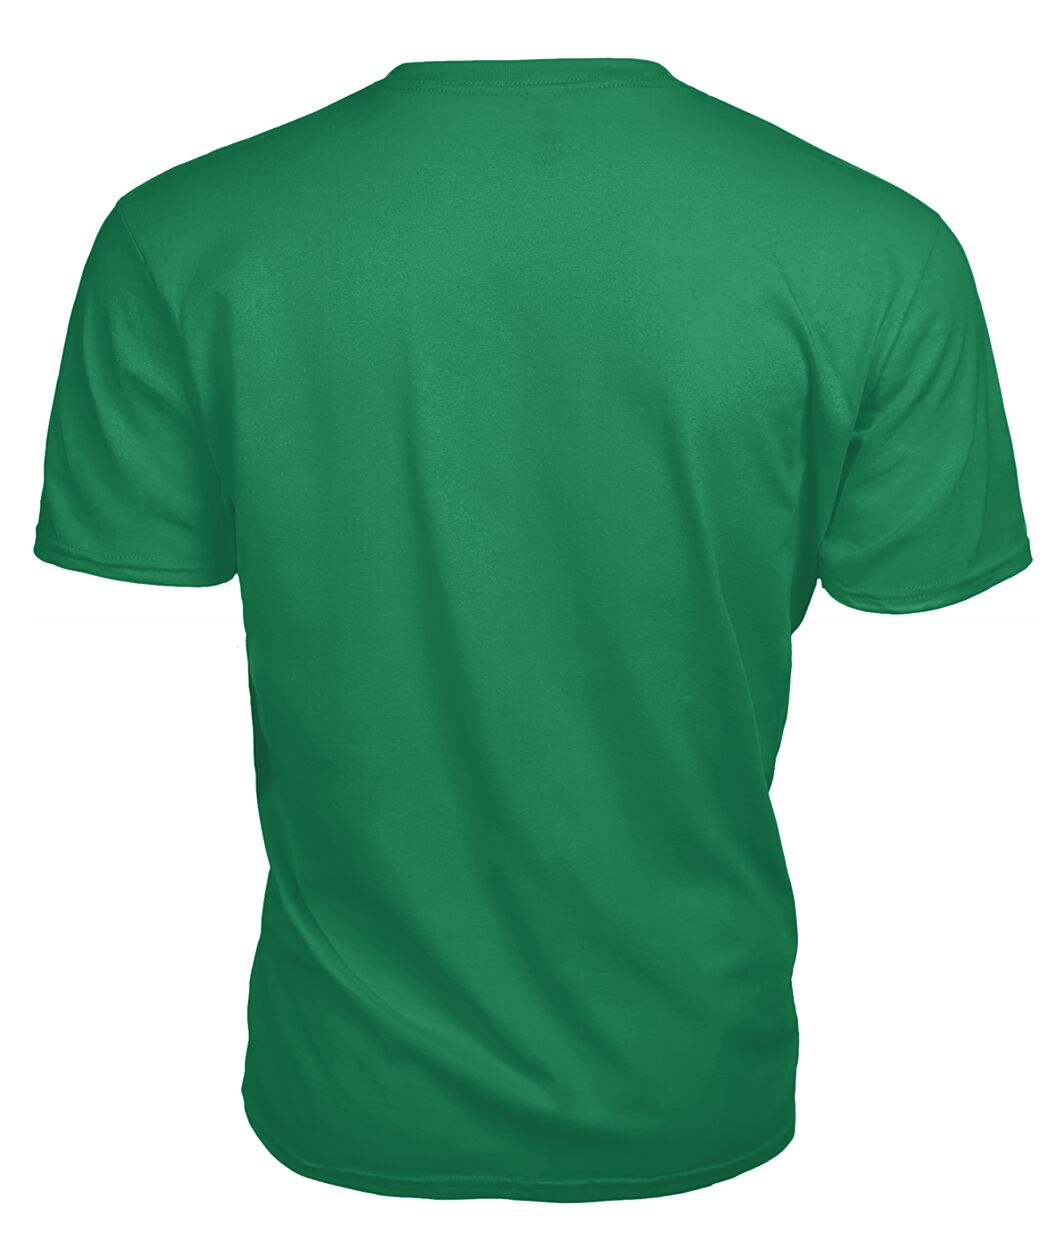 MacPherson Family Tartan - 2D T-shirt